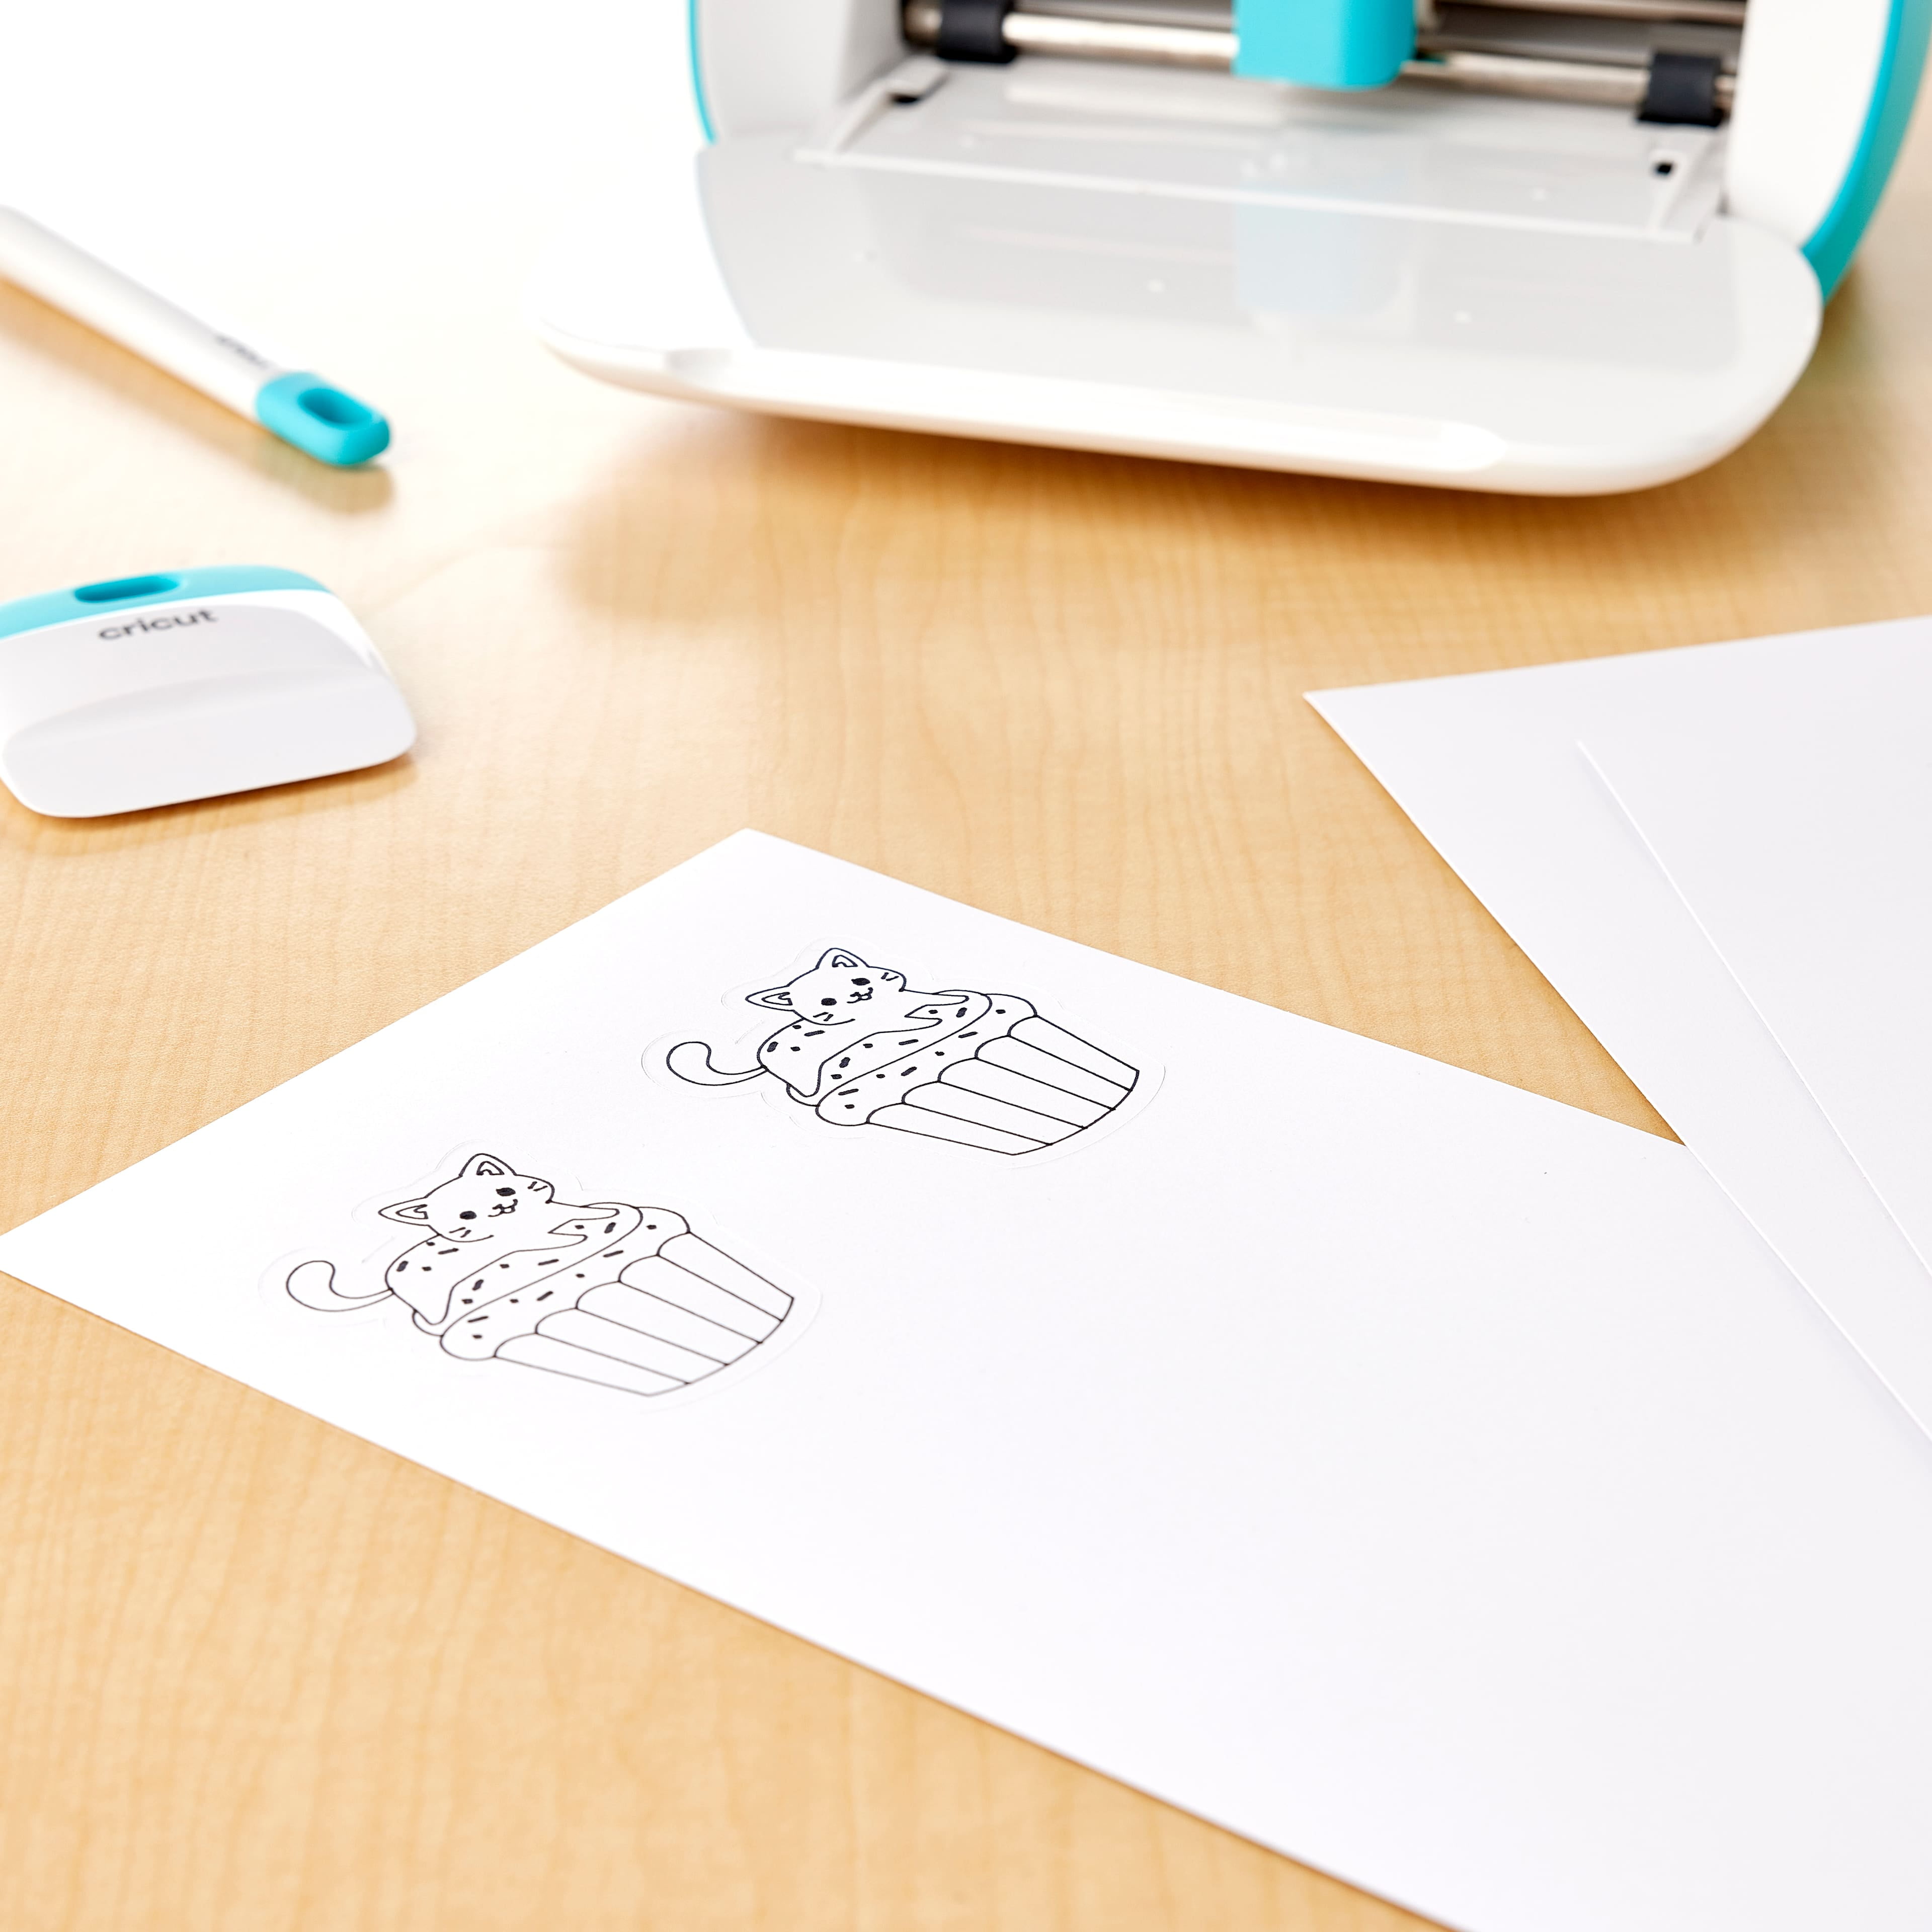 Cricut Joy Smart Paper Sticker Cardstock in White